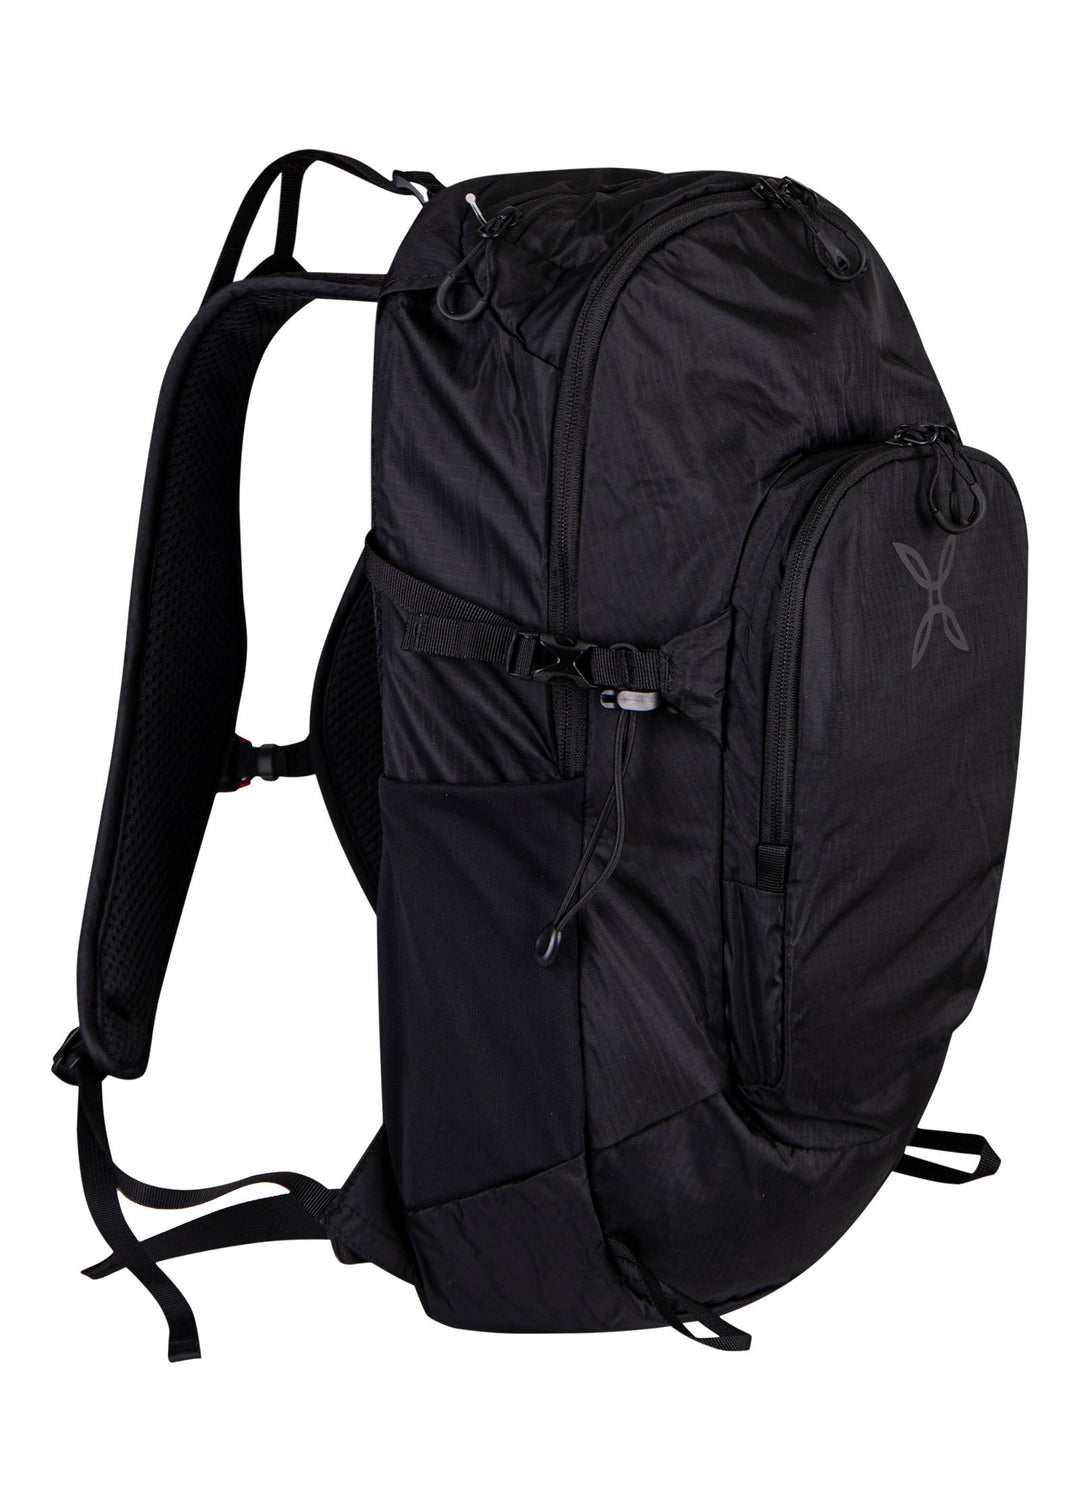 Hoverla 22 Backpack - Nero (90) - Blogside